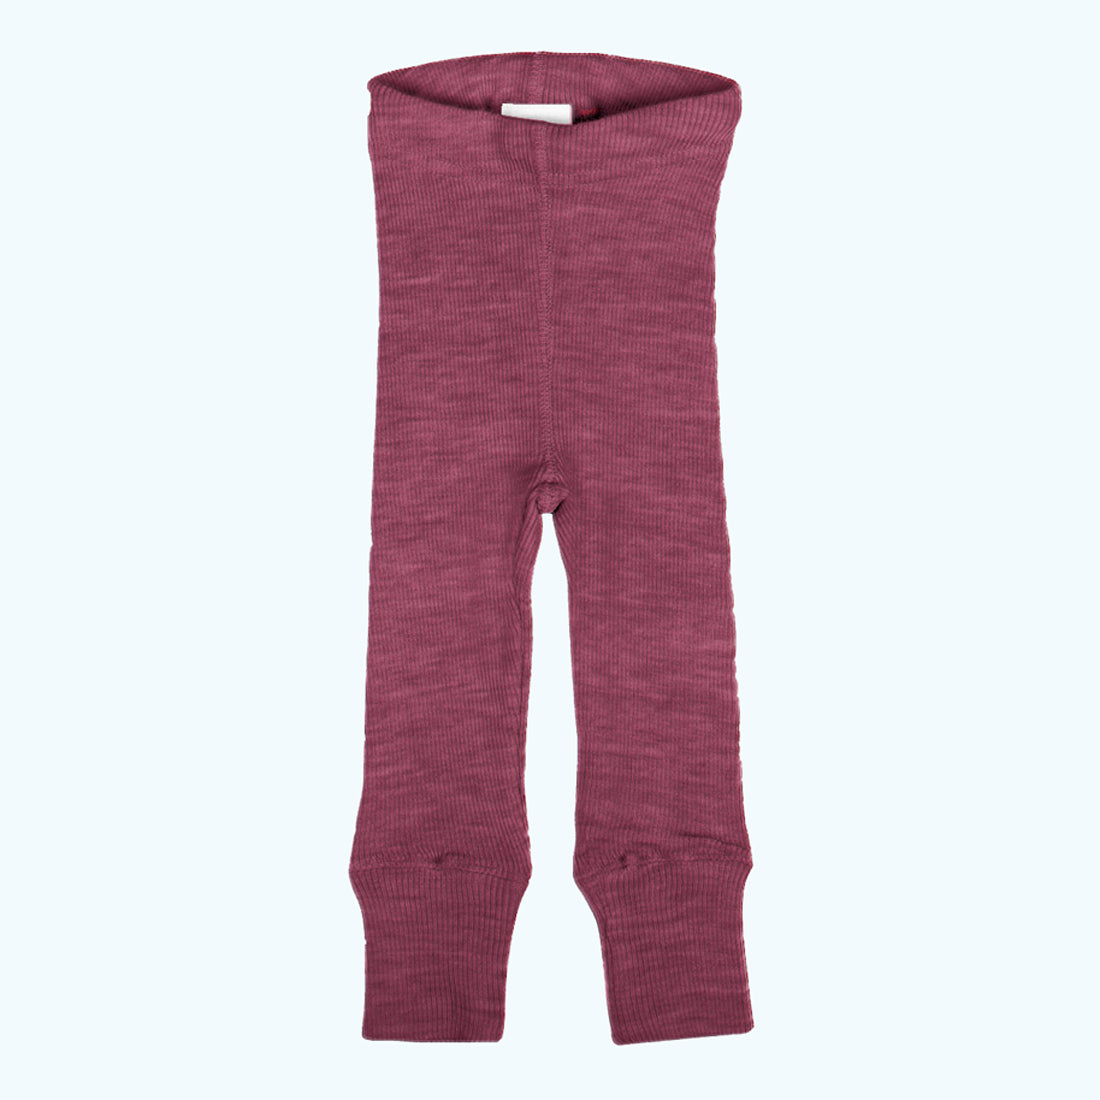 Unisex Toddler Leggings Natural Merino Wool Leggings Pants for